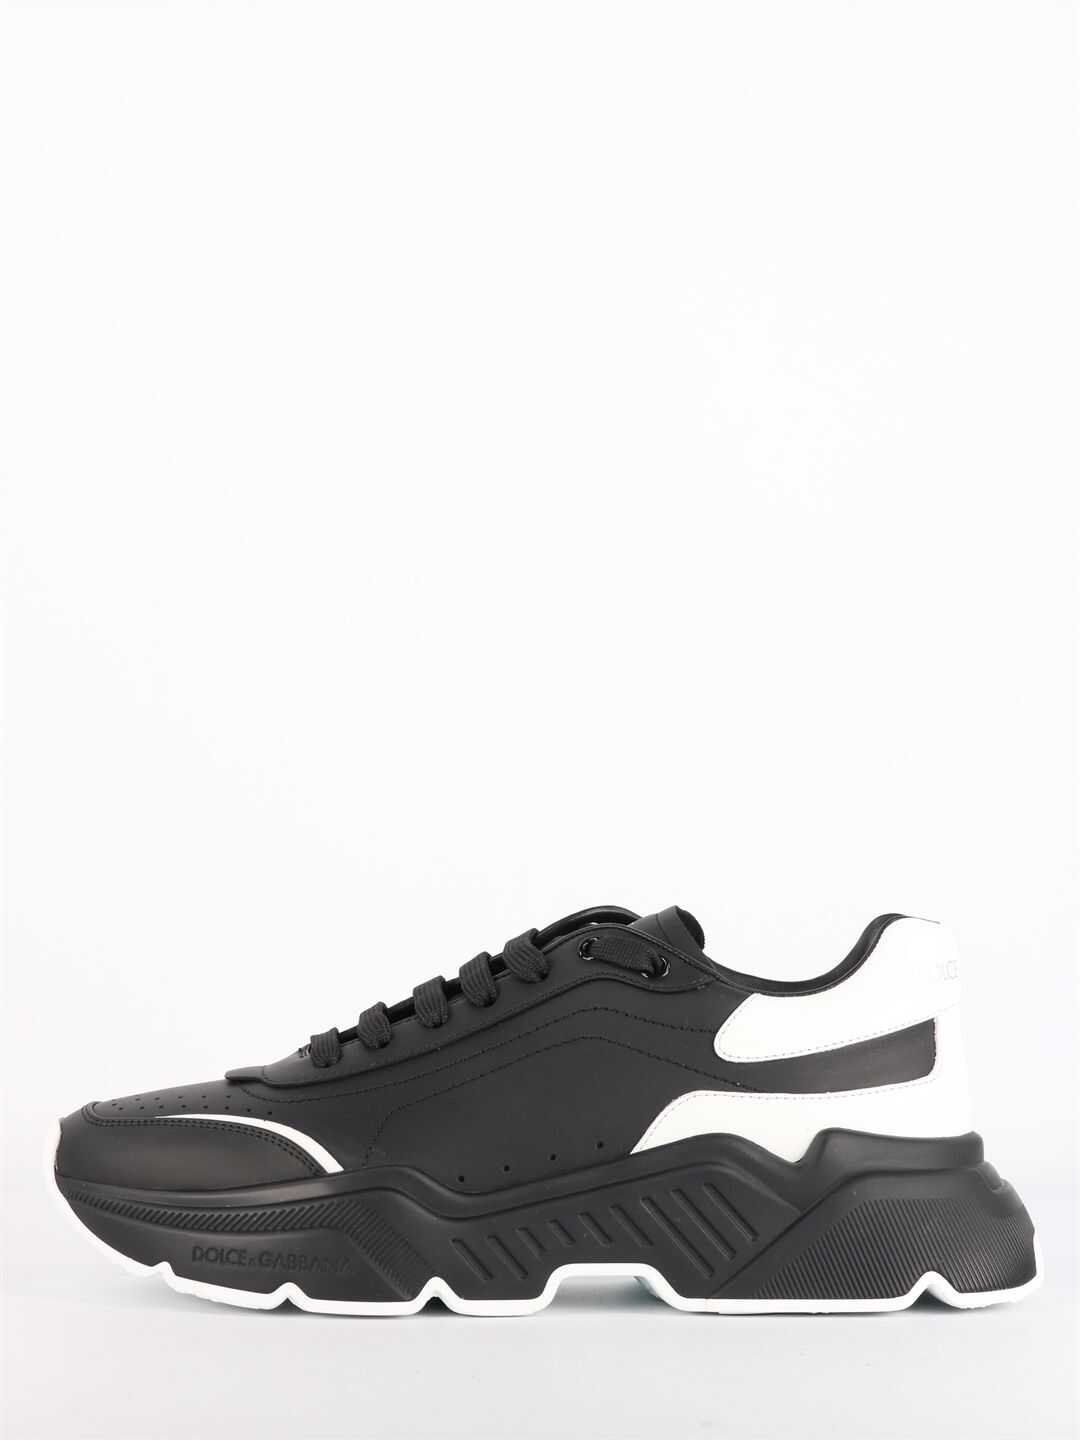 Dolce & Gabbana Daymaster Sneakers Black CS1791 AX589 Black/white